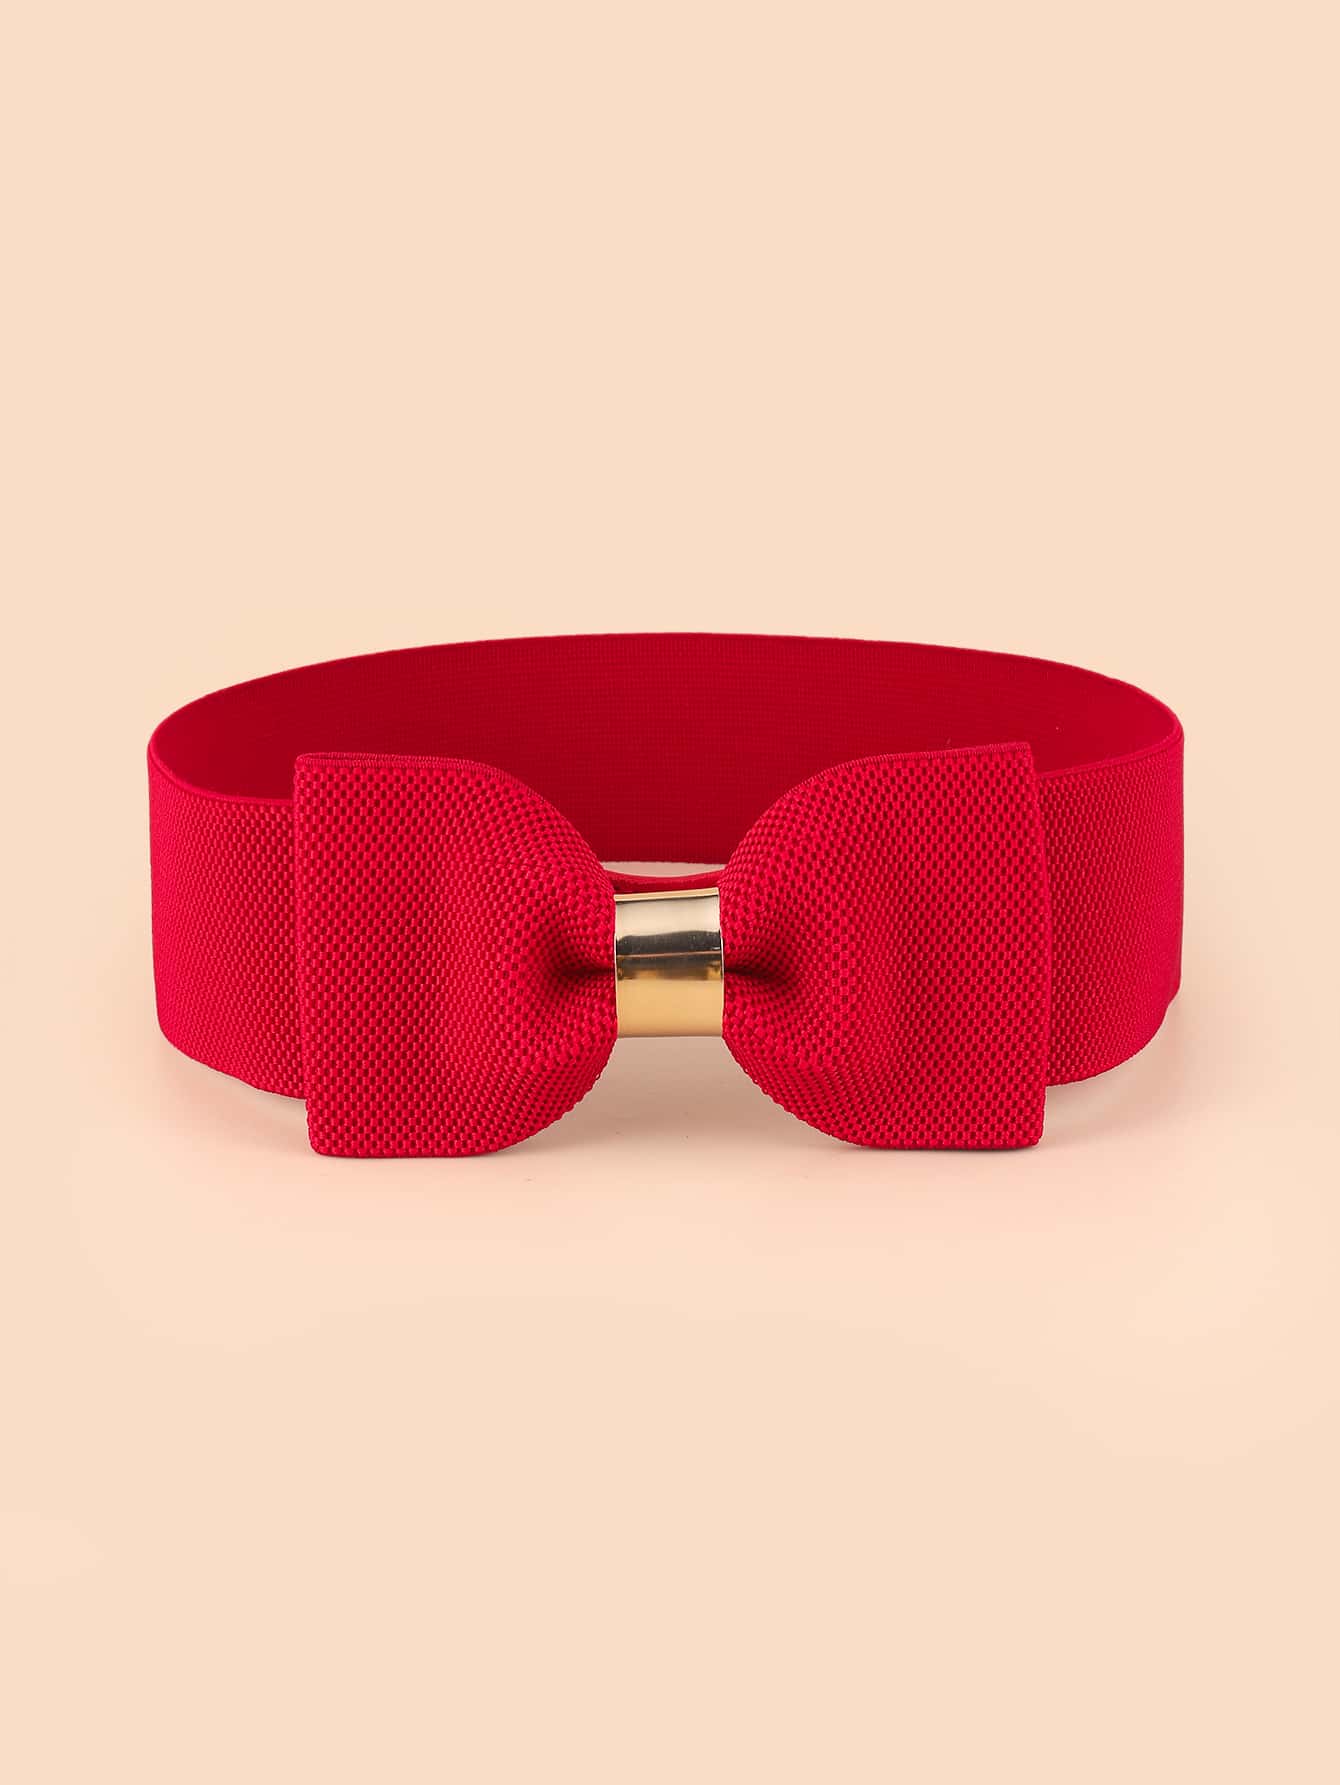 Women's Elastic Belt With Bow-Knot Design, Suitable For Dress Decor - Negative Apparel